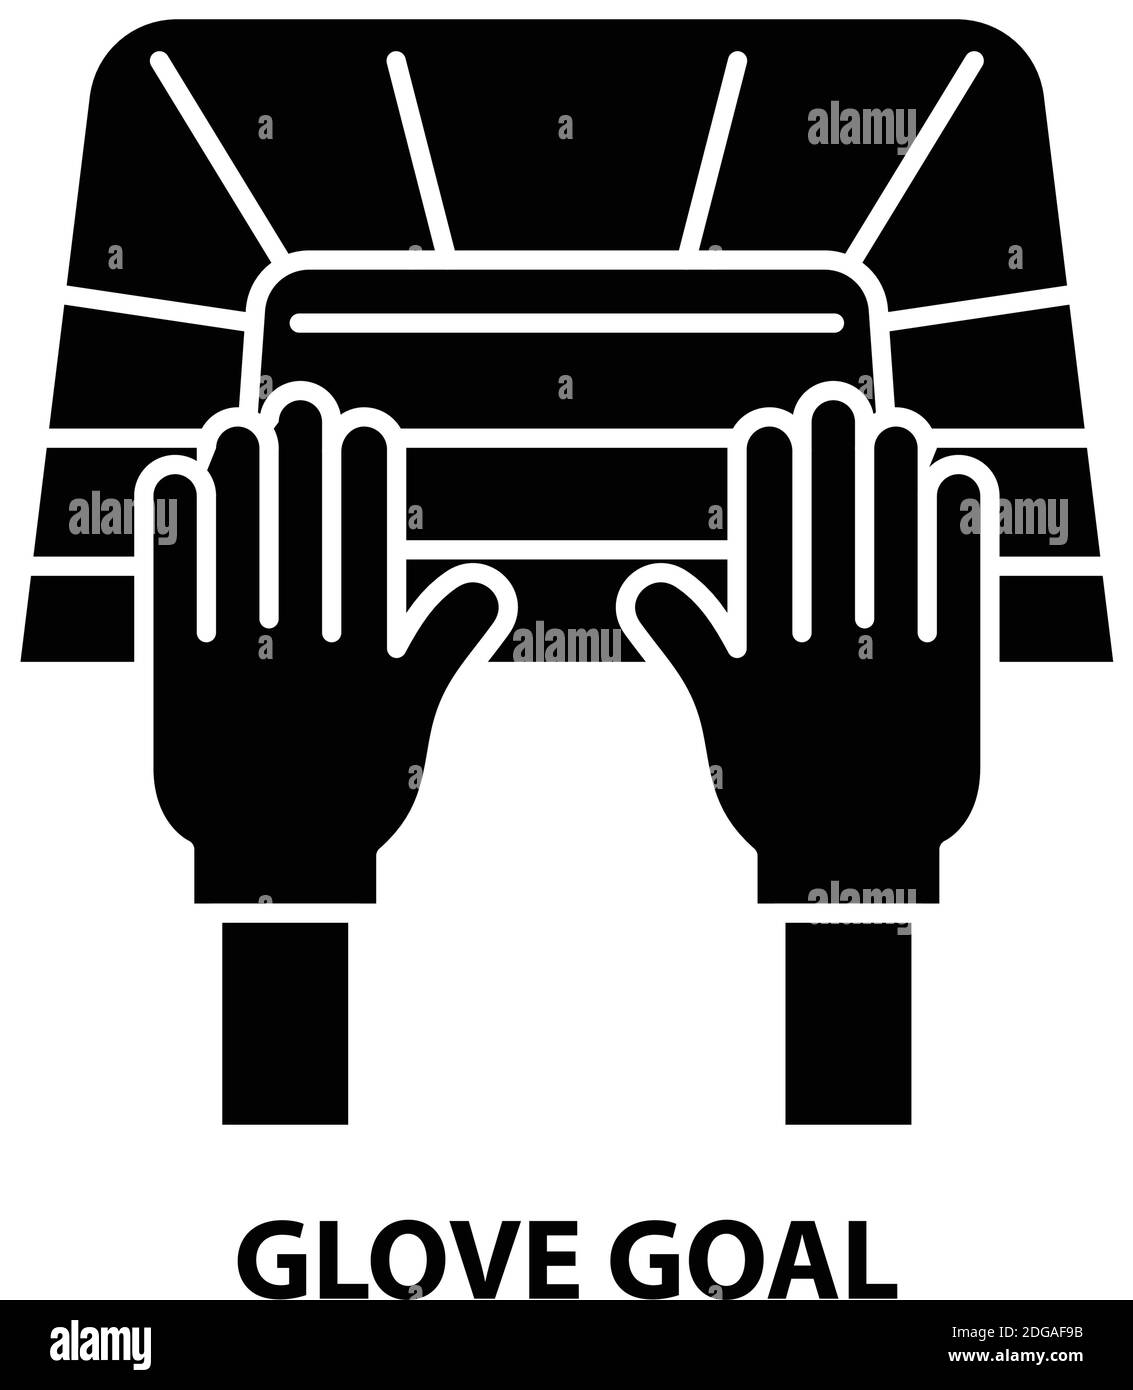 glove goal icon, black vector sign with editable strokes, concept illustration Stock Vector